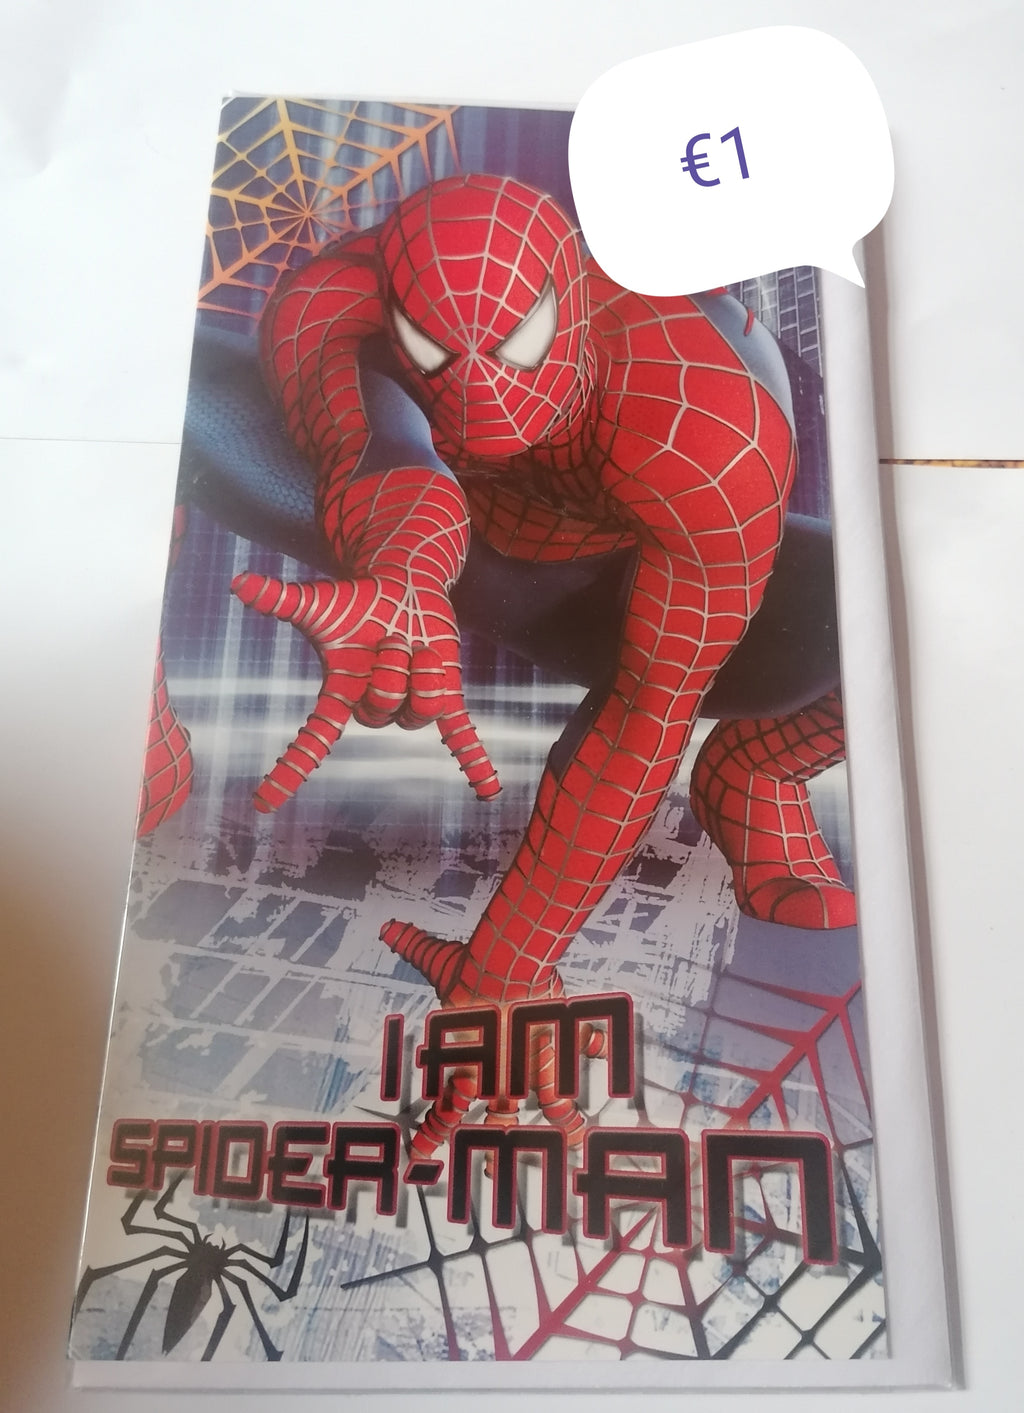 spiderman birthday cards